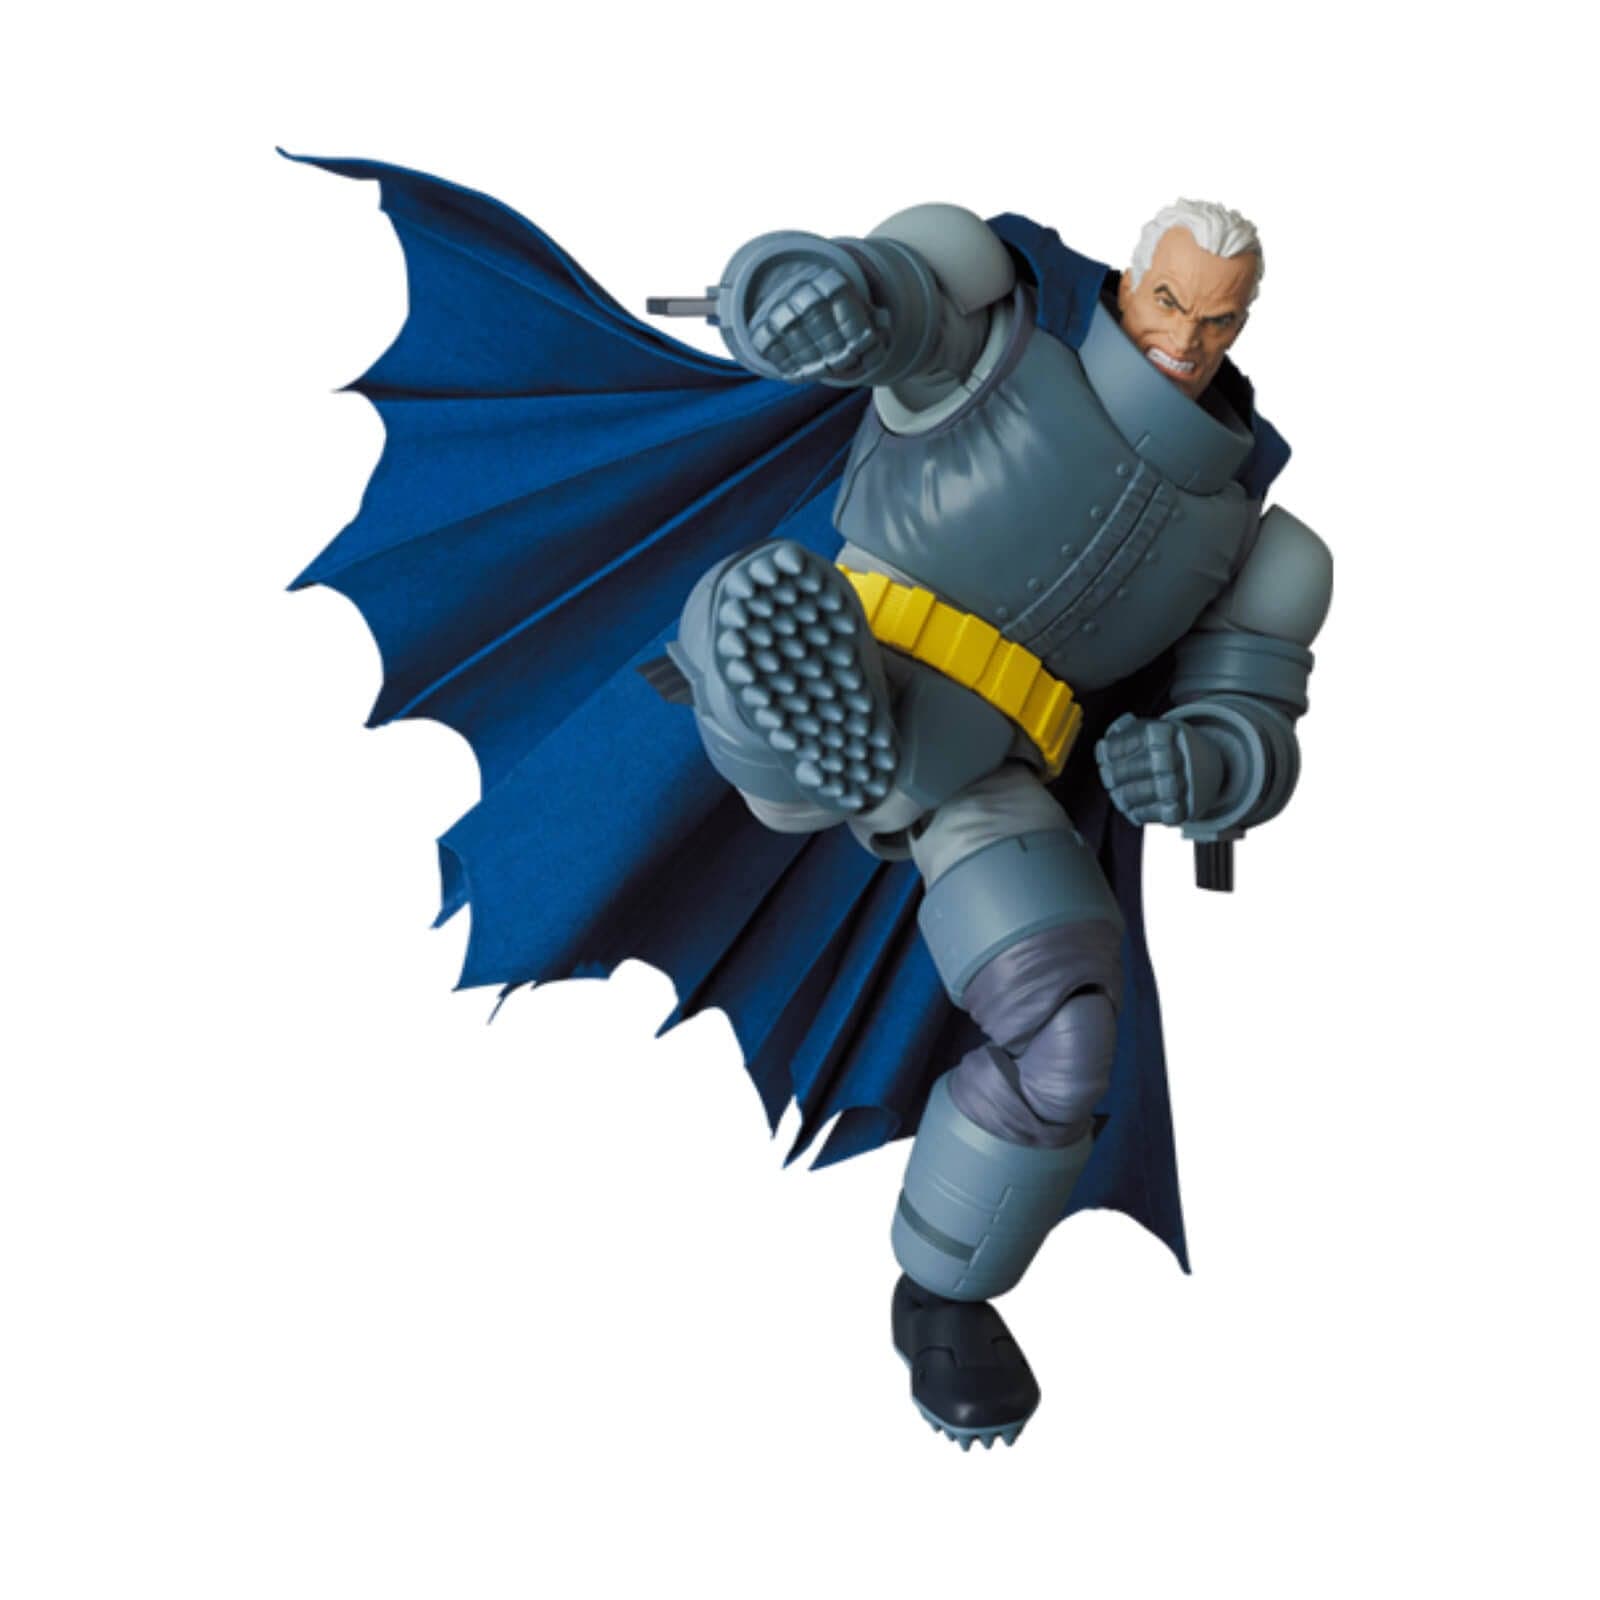 Medicom Toy MAFEX No. 146 Batman: The Dark Knight Returns Armored Batman Action Figure